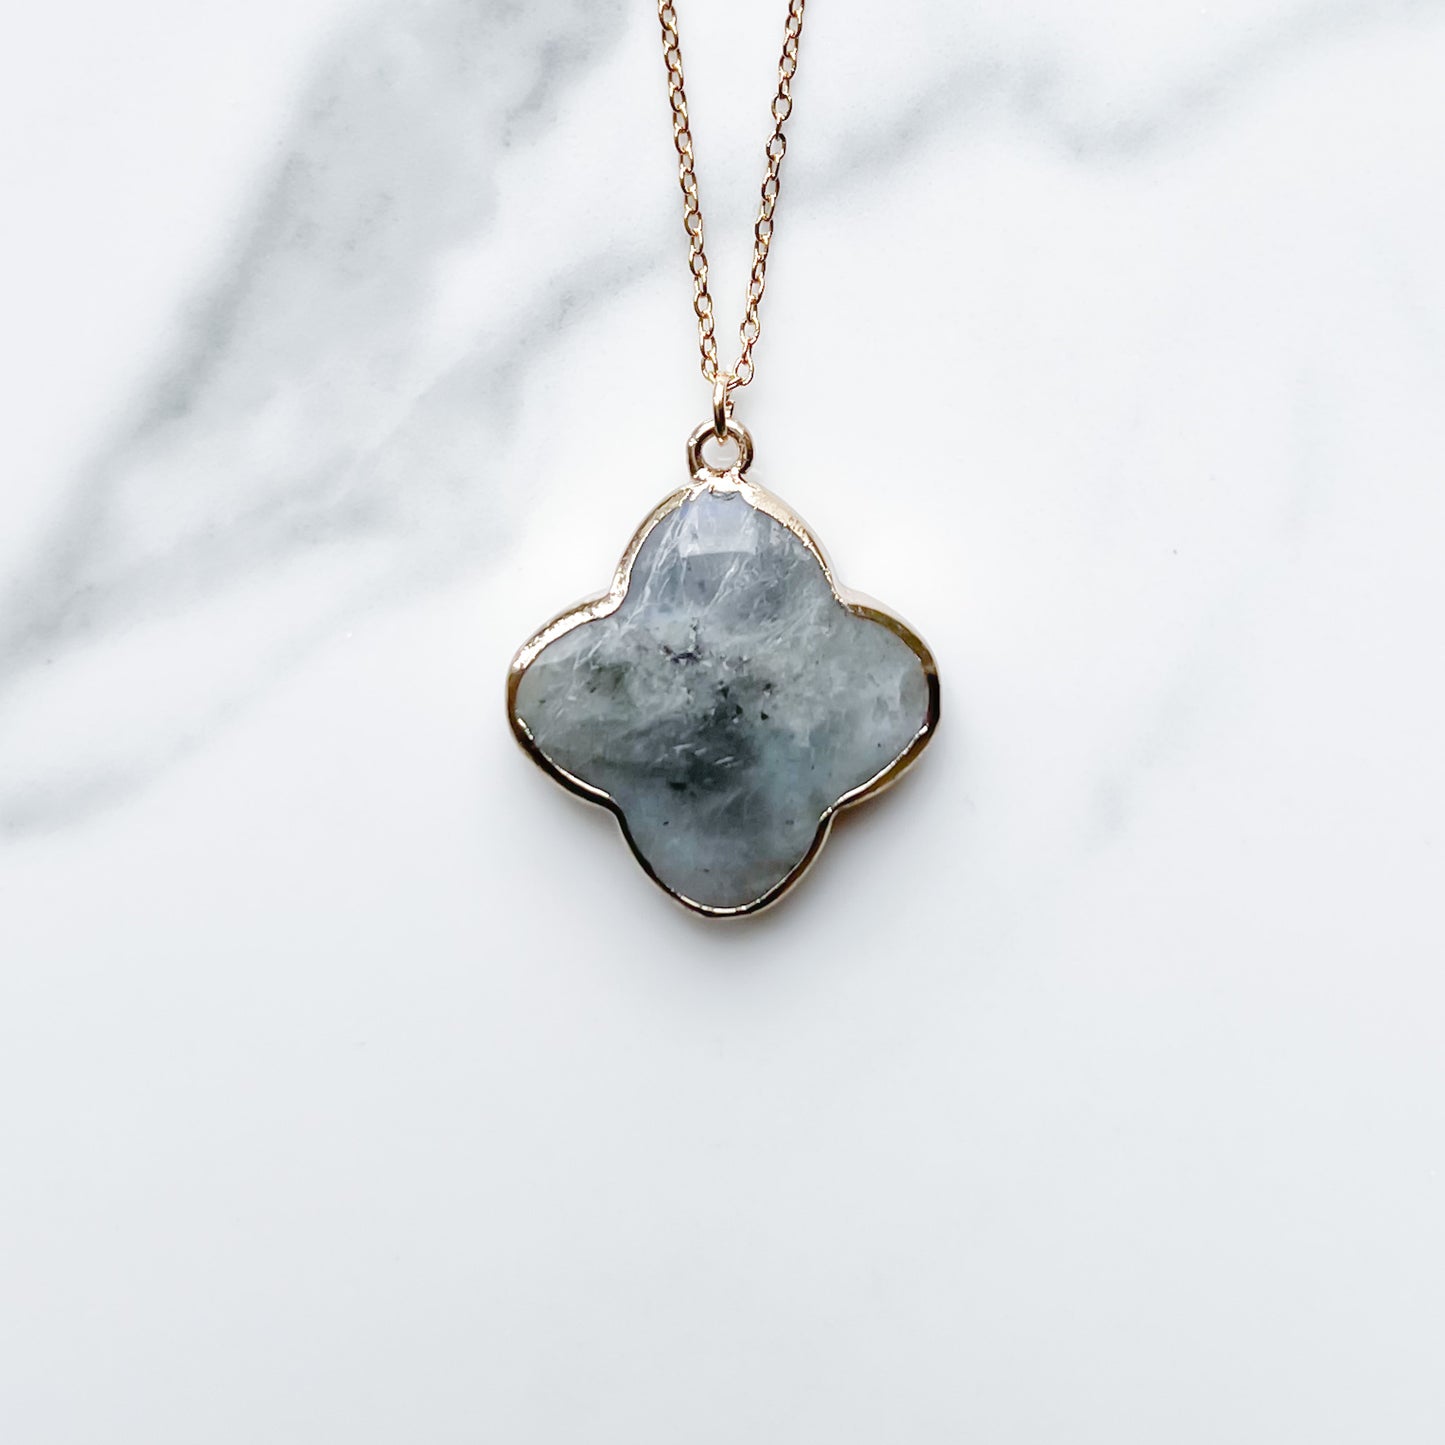 Semi precious healing gemstone clover shaped pendant necklaces in labradorite